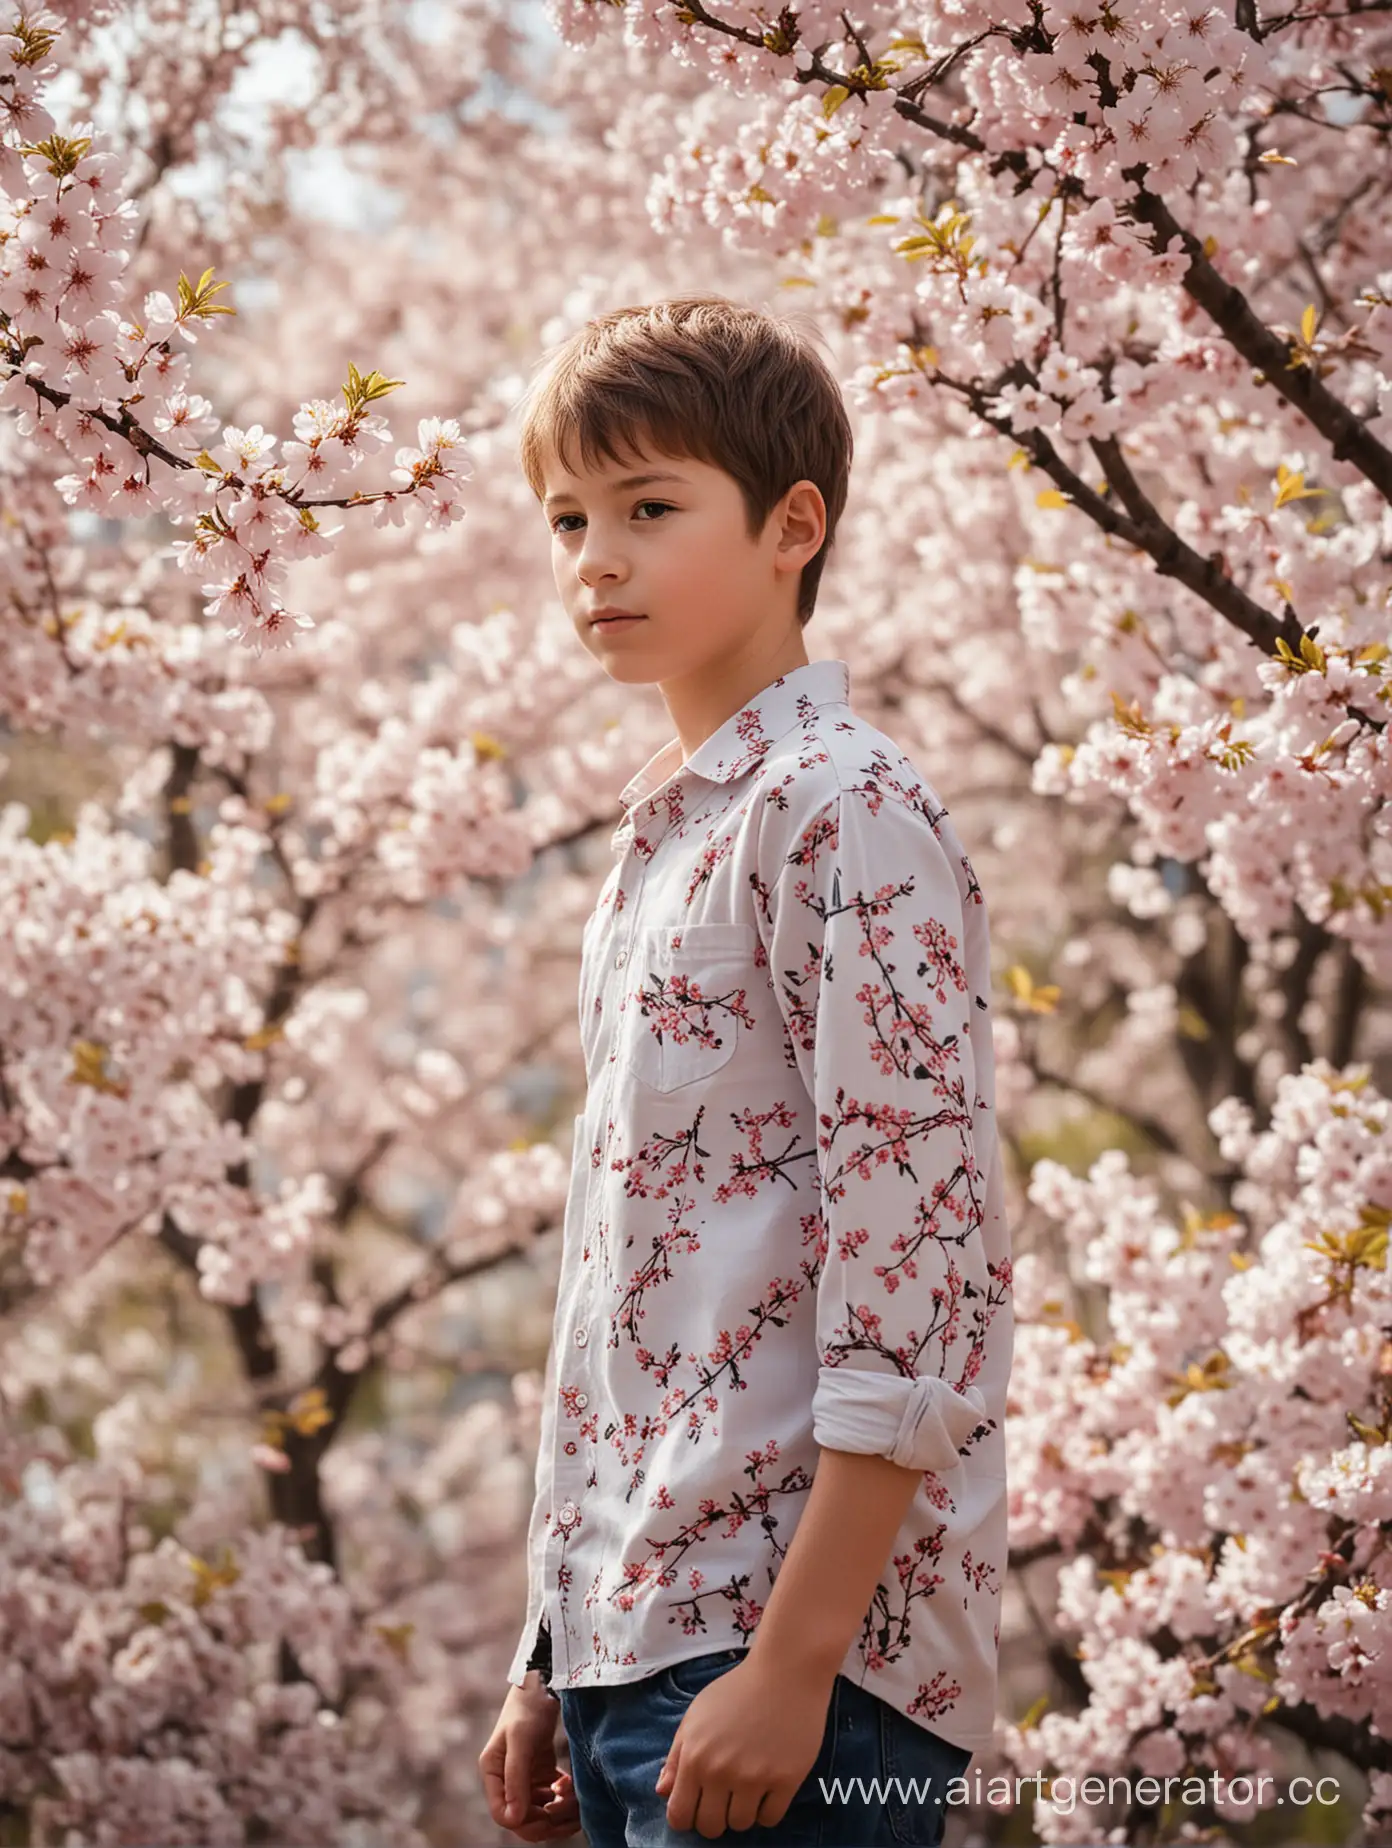 Joyful-Boy-Amidst-Flourishing-Cherry-Blossoms